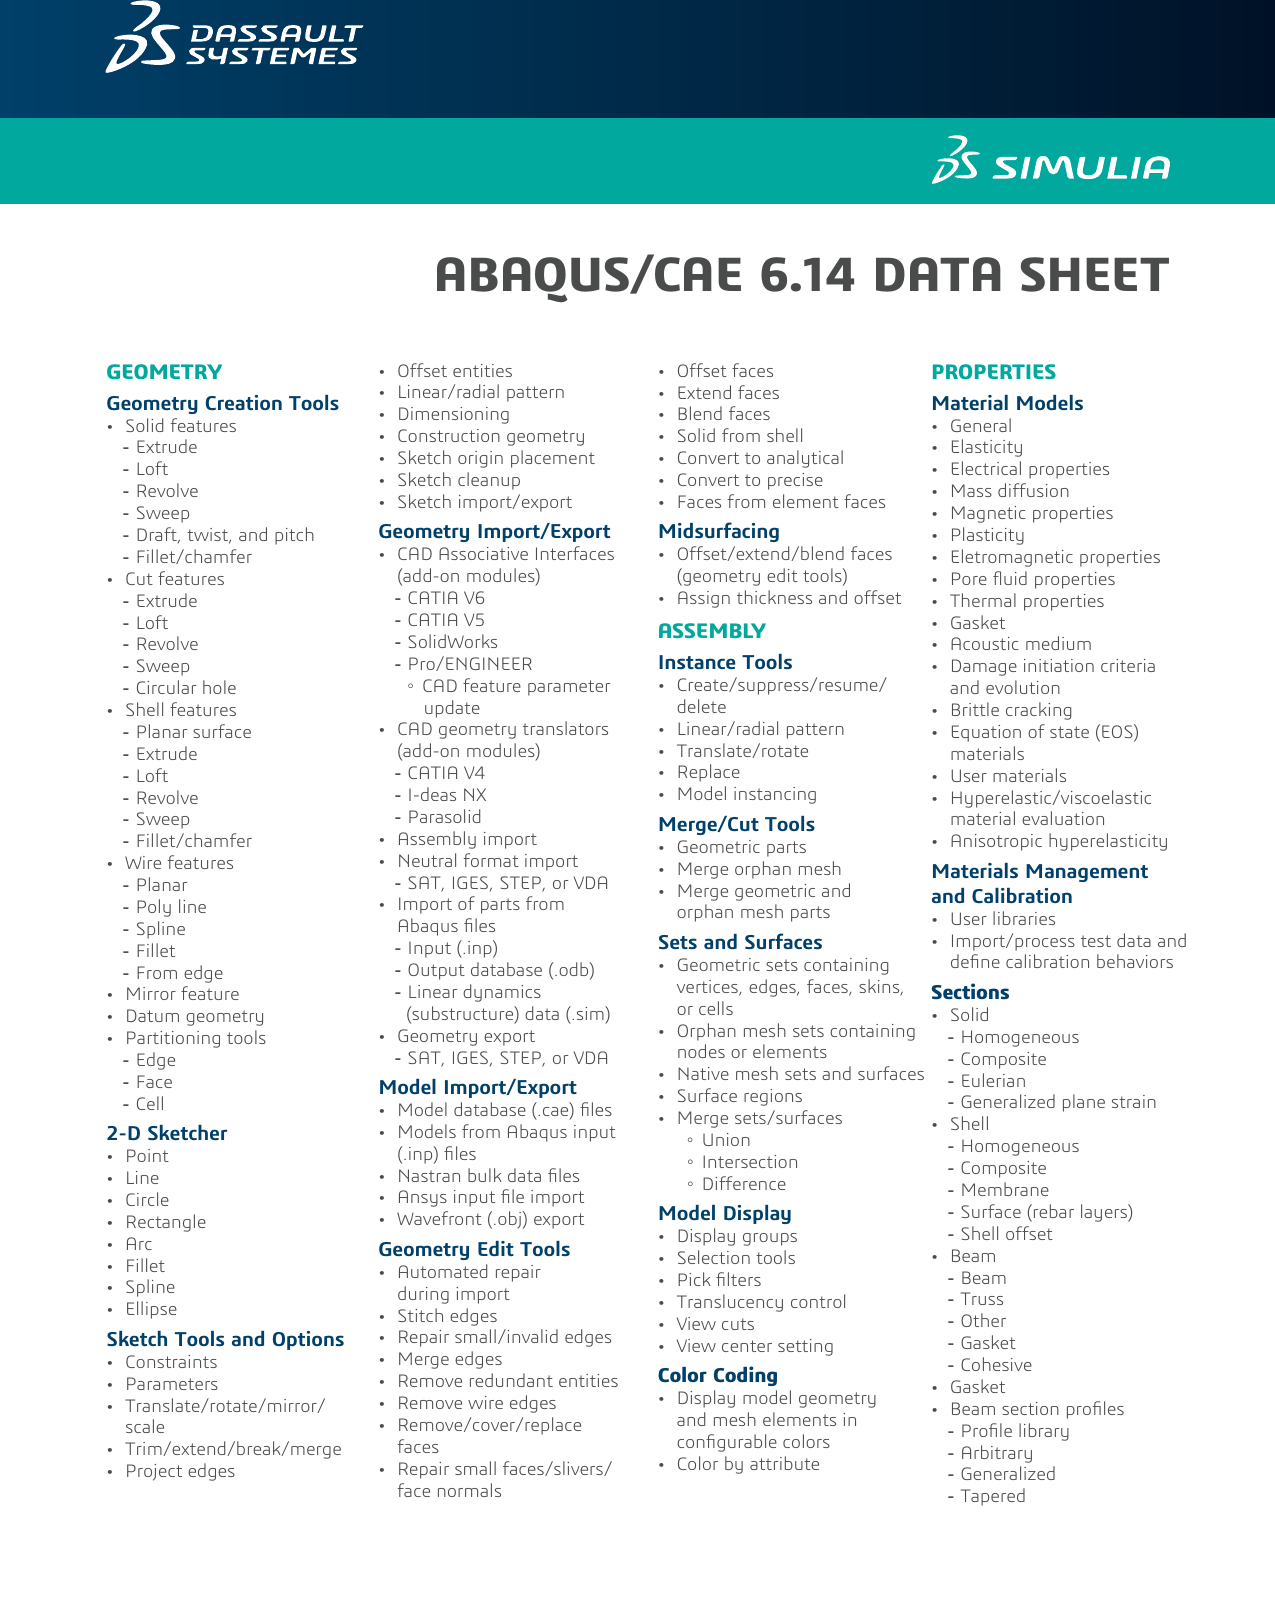 Page 1 of 4 - Simulia-abaqus-cae-datasheet